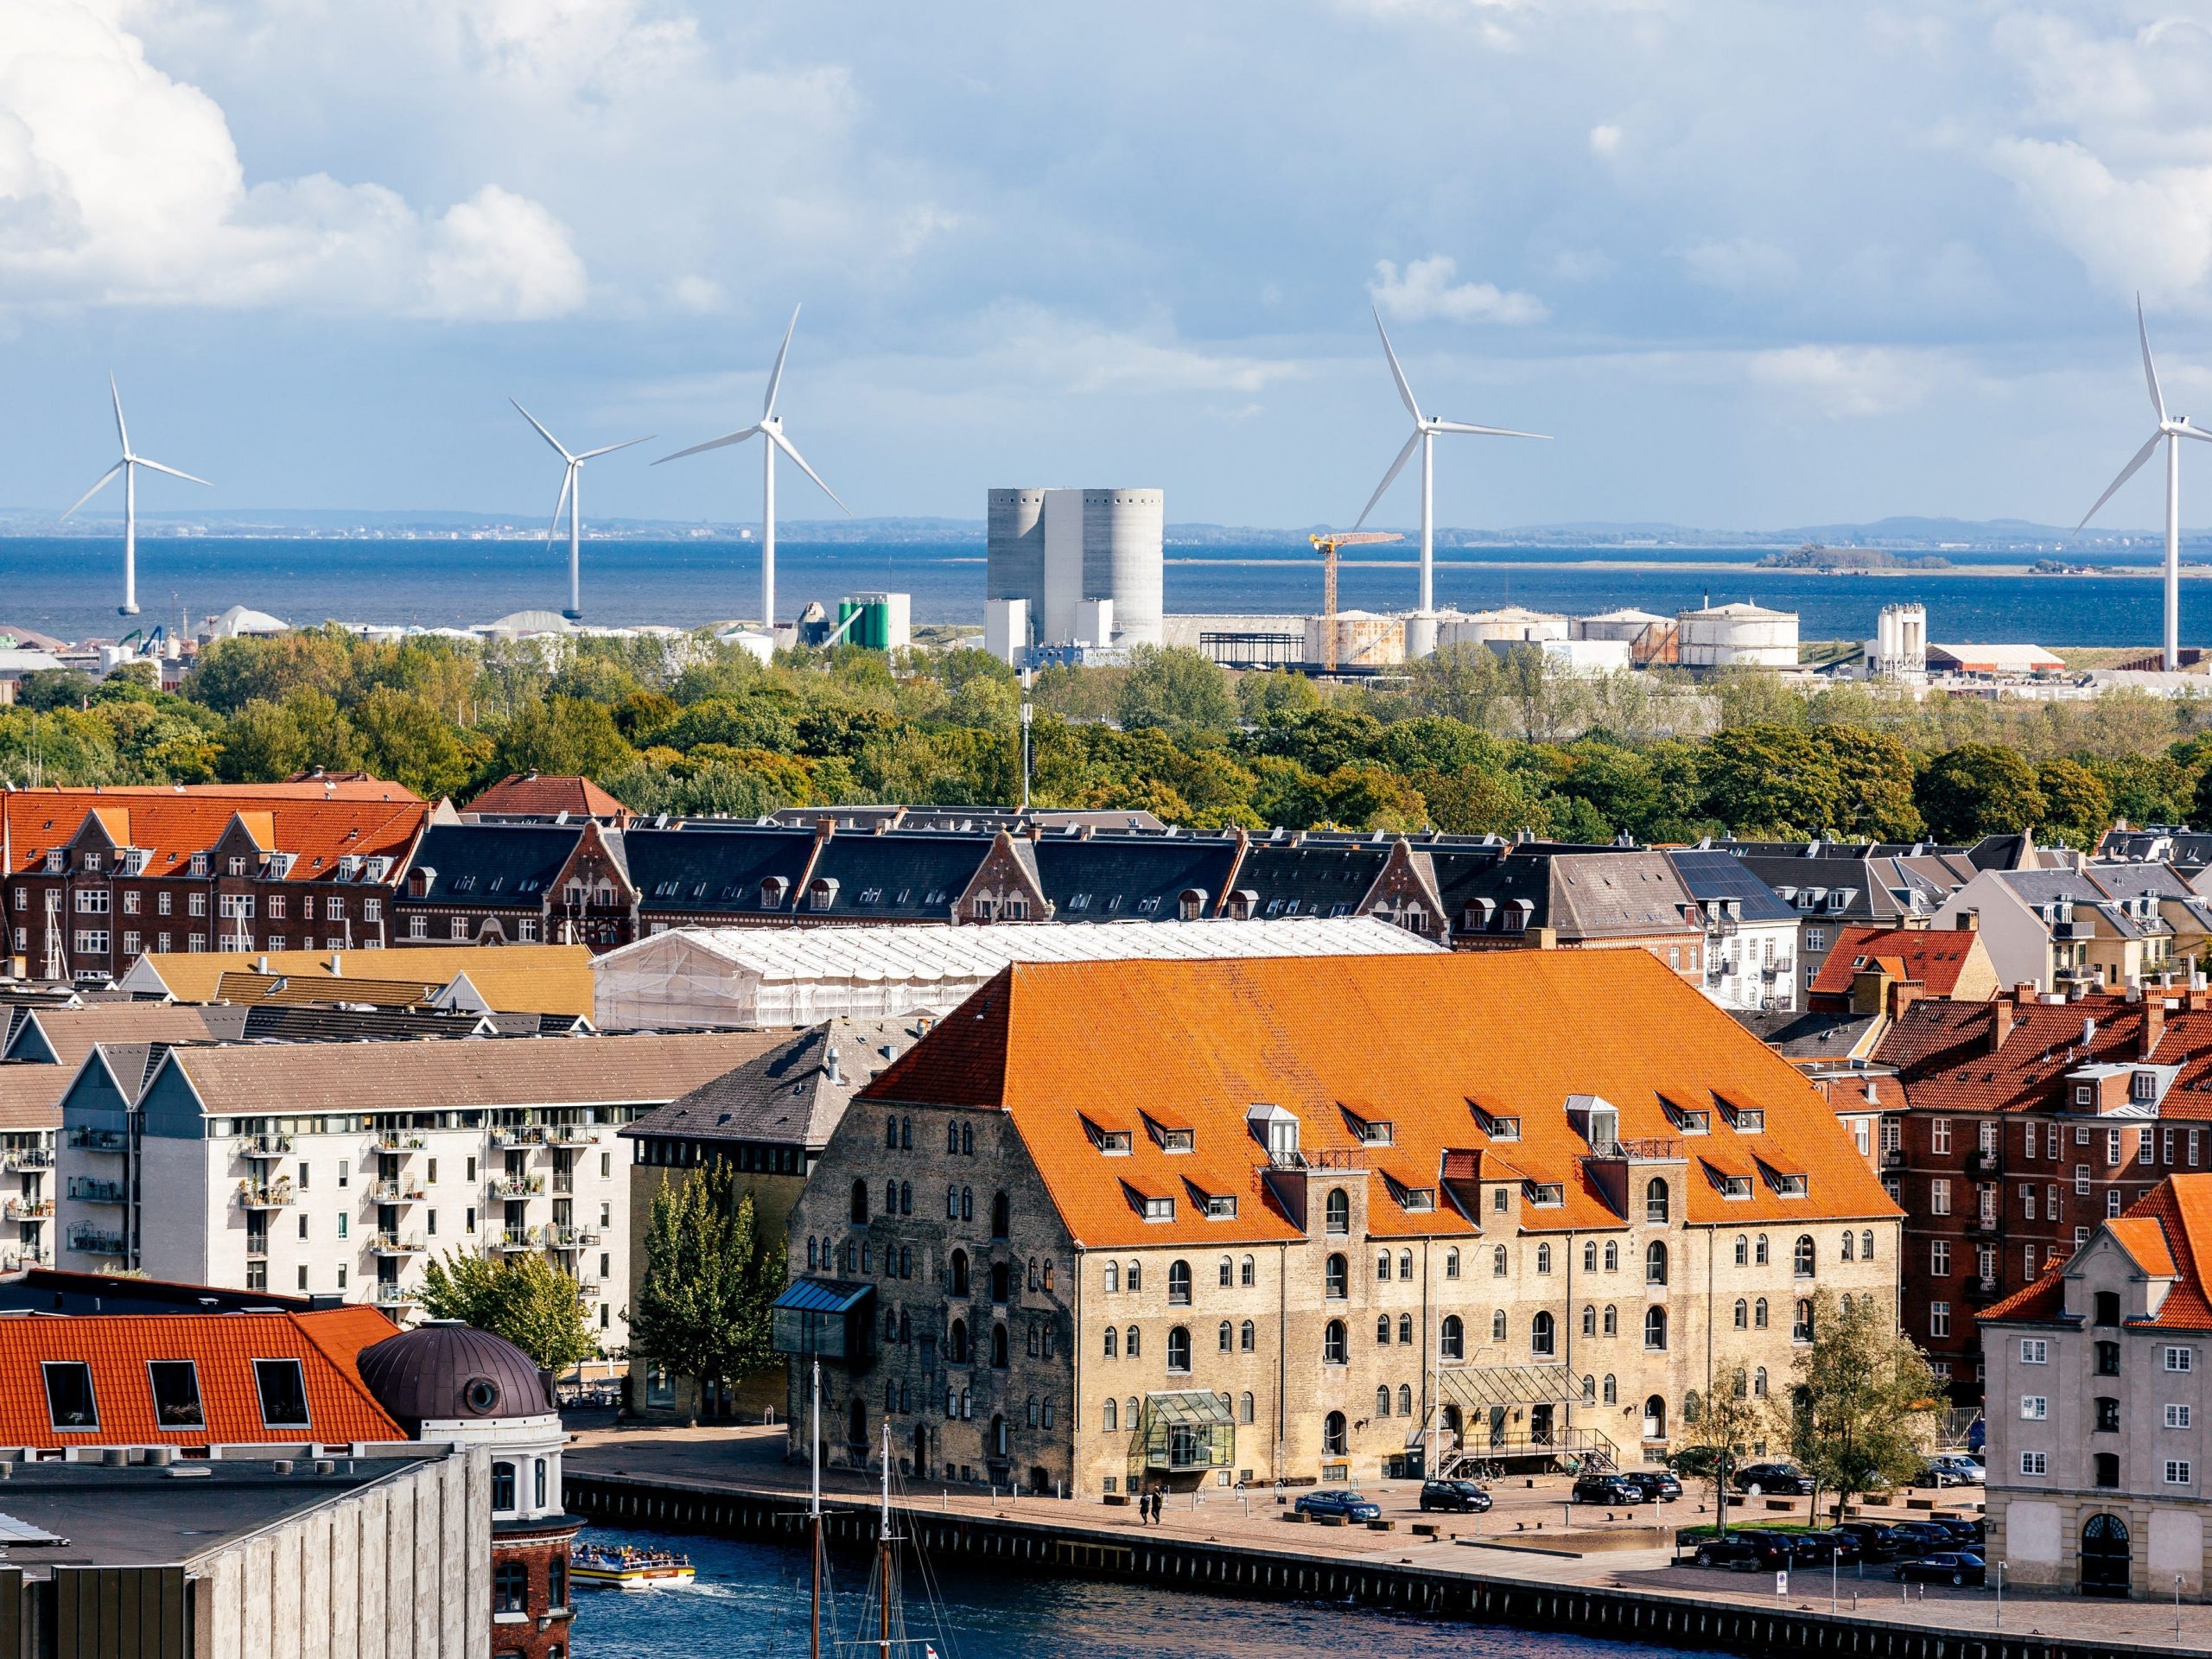 Copenhagen skyline with wind turbines in the background, Denmark.